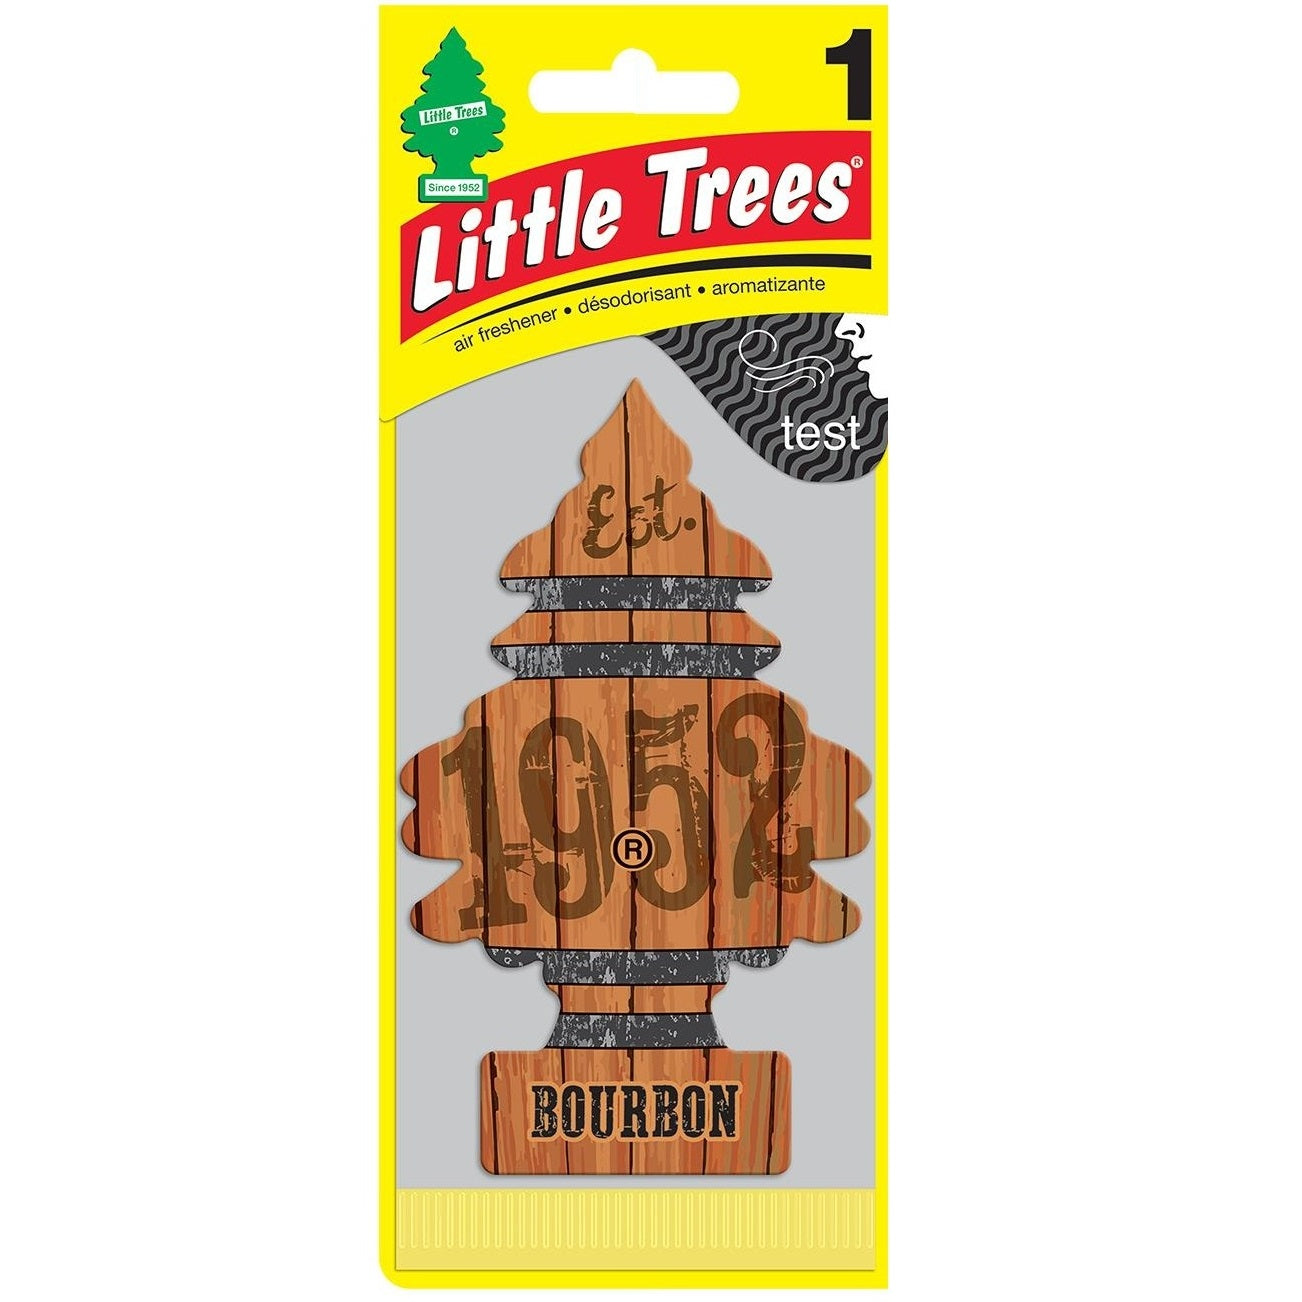 Little Trees Car Air Freshener - Bourbon - 3 pieces